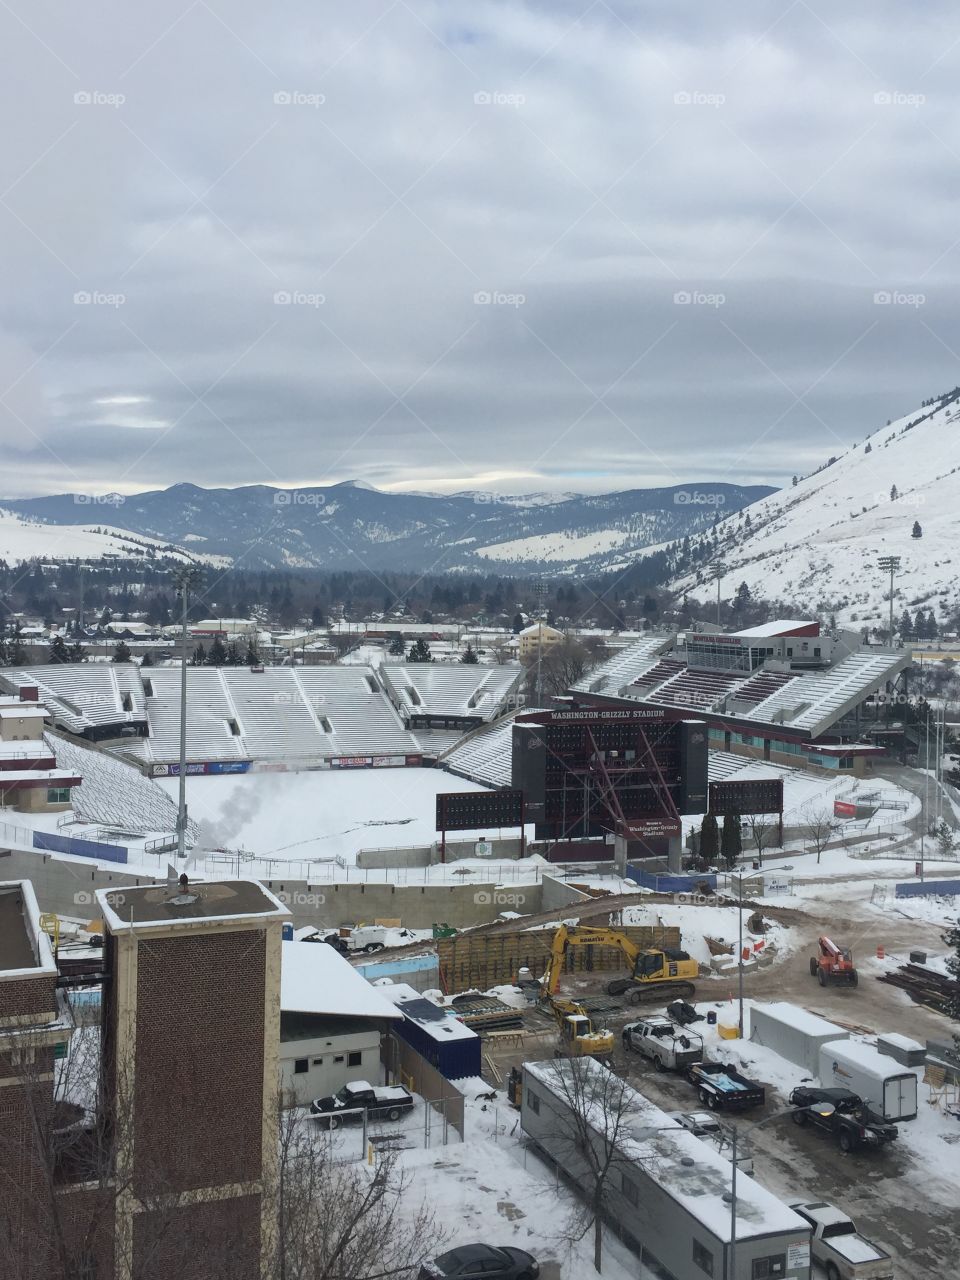 University of Montana football stadium in Winter 